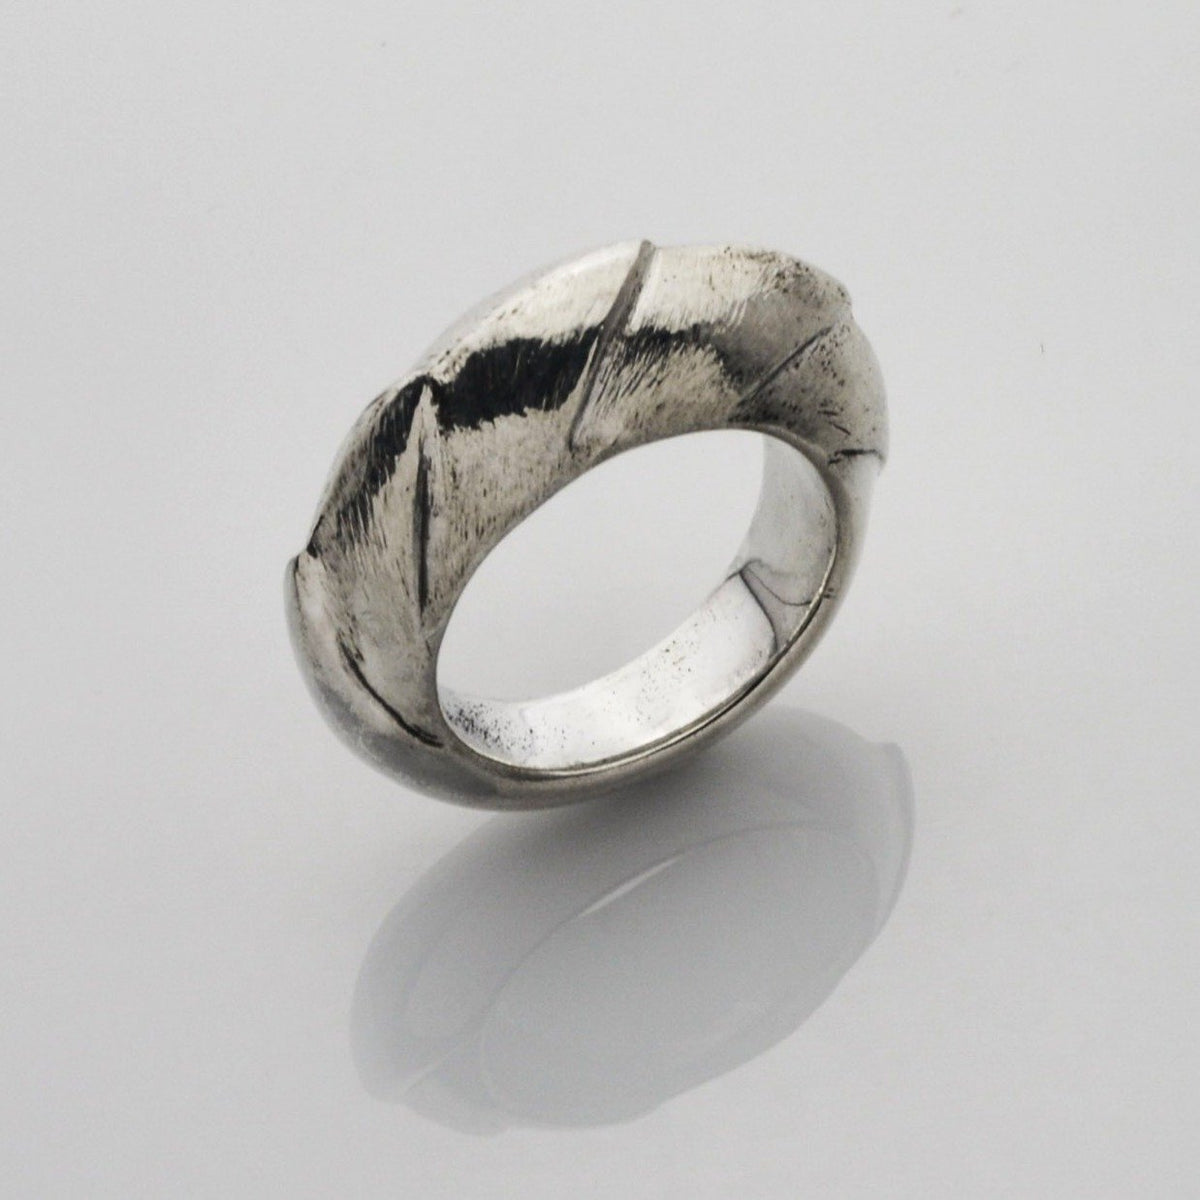 Unique heavy designer silver ring